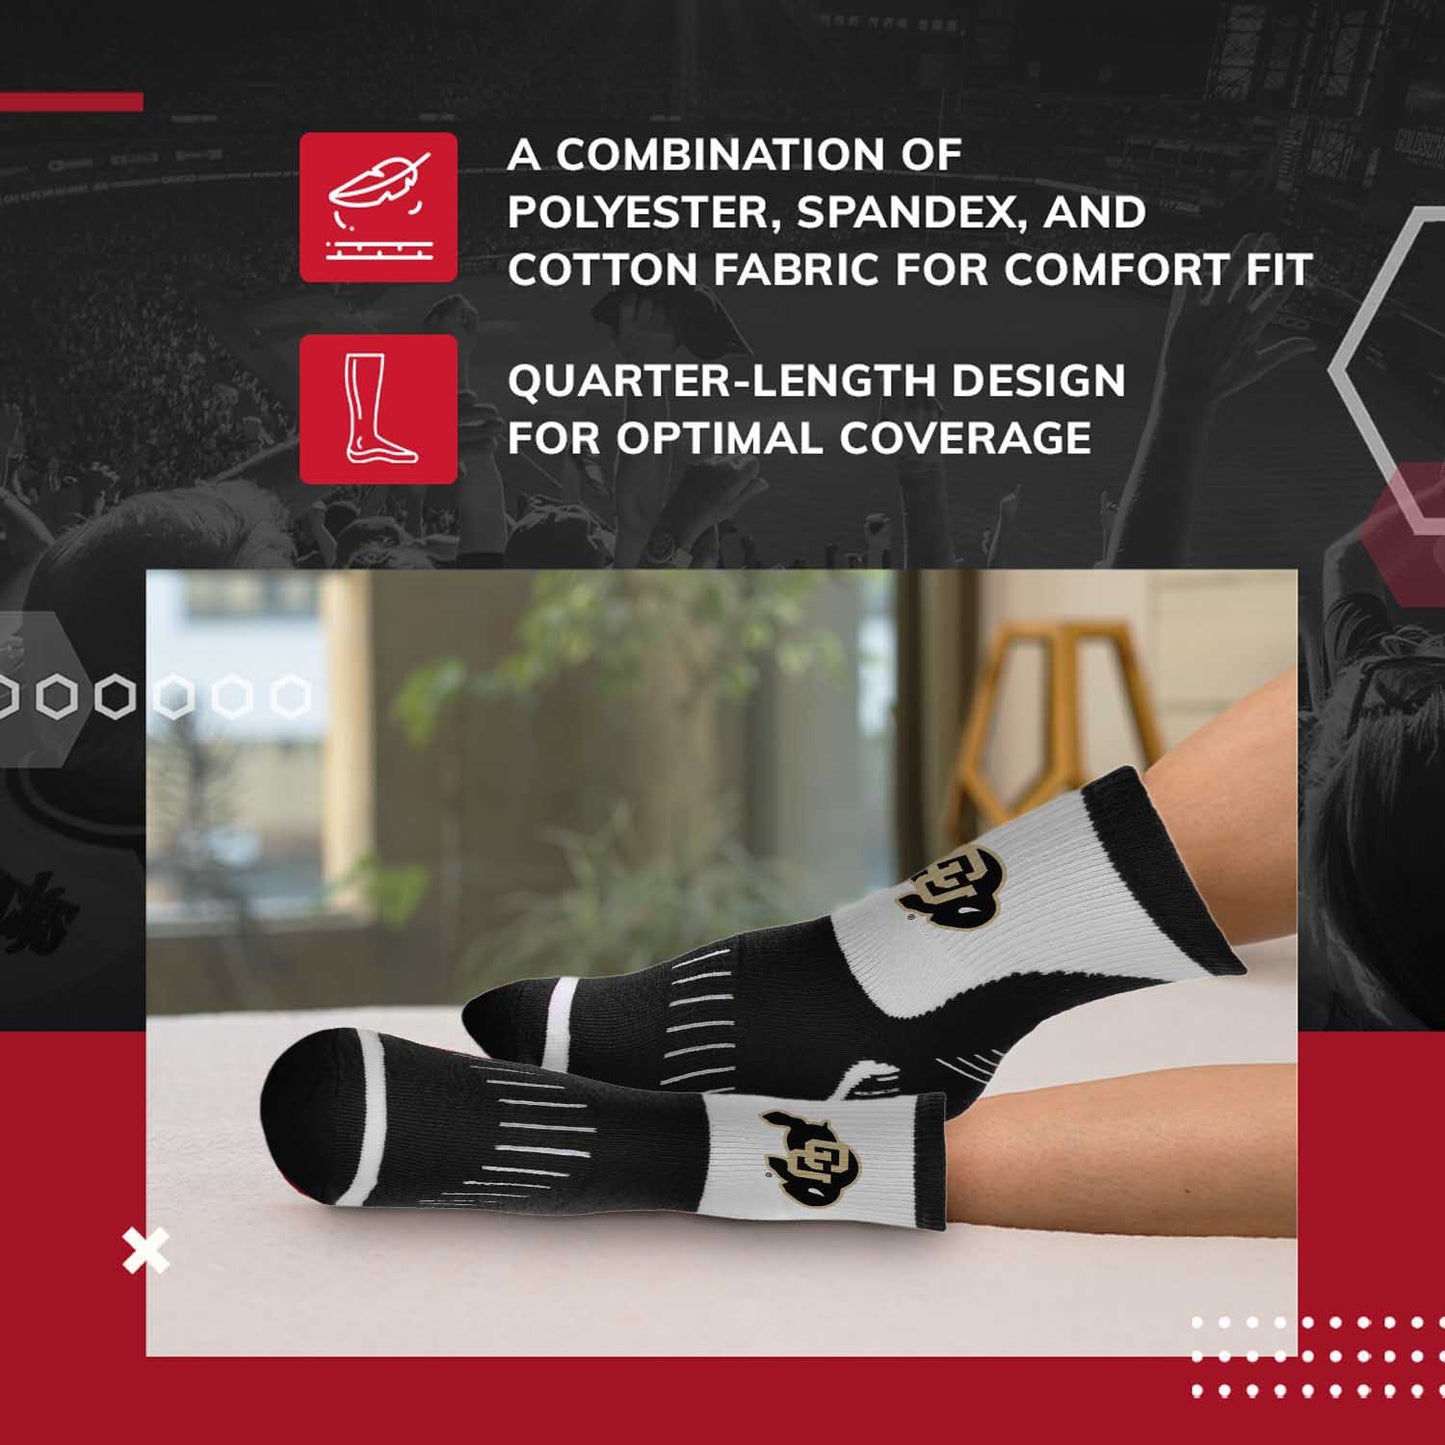 Colorado Buffaloes NCAA Youth Surge Team Mascot Quarter Socks - Black